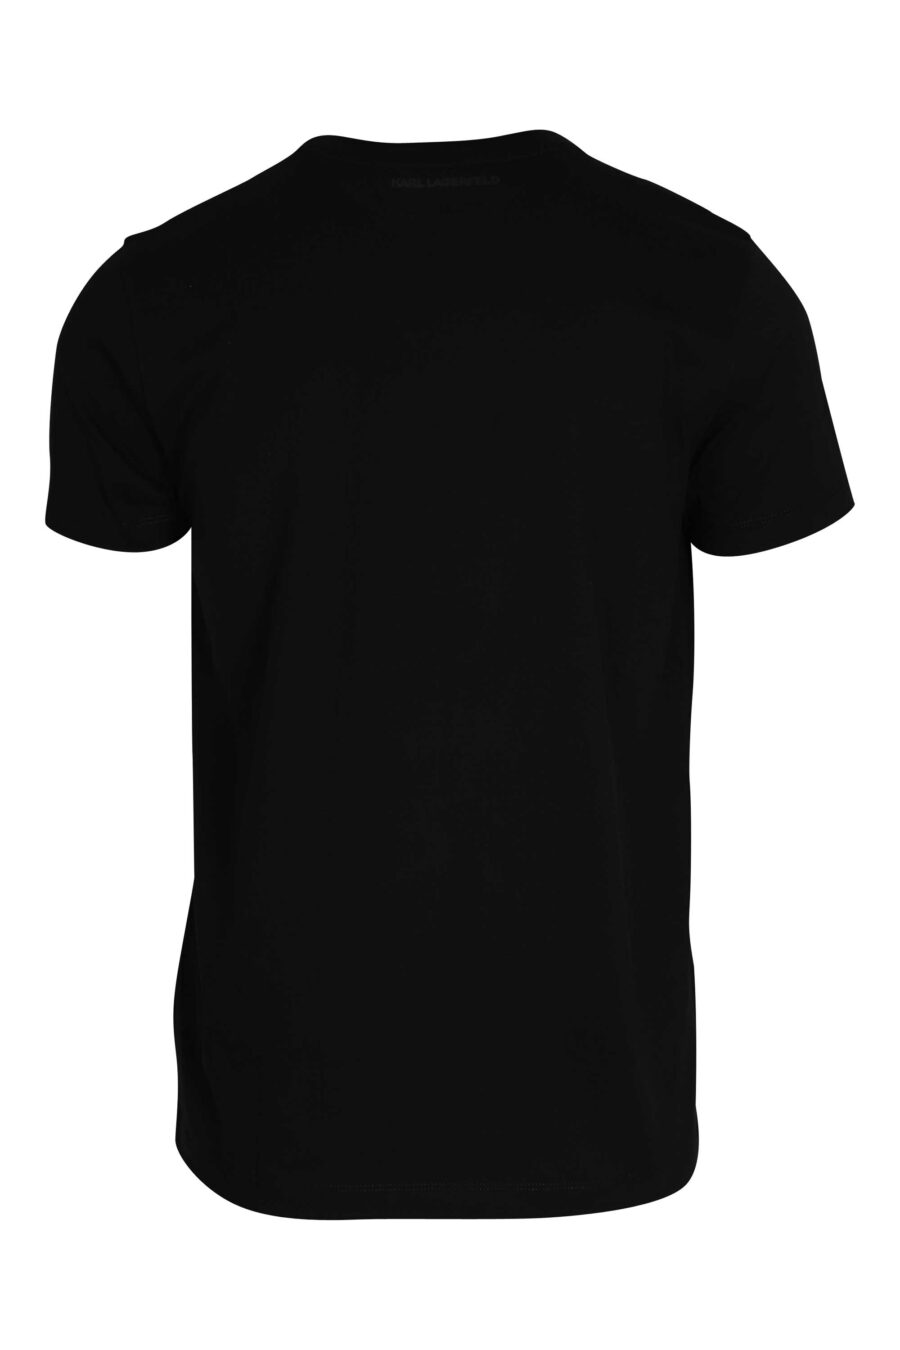 Camiseta negra con maxilogo negro brillante - 014543001 2